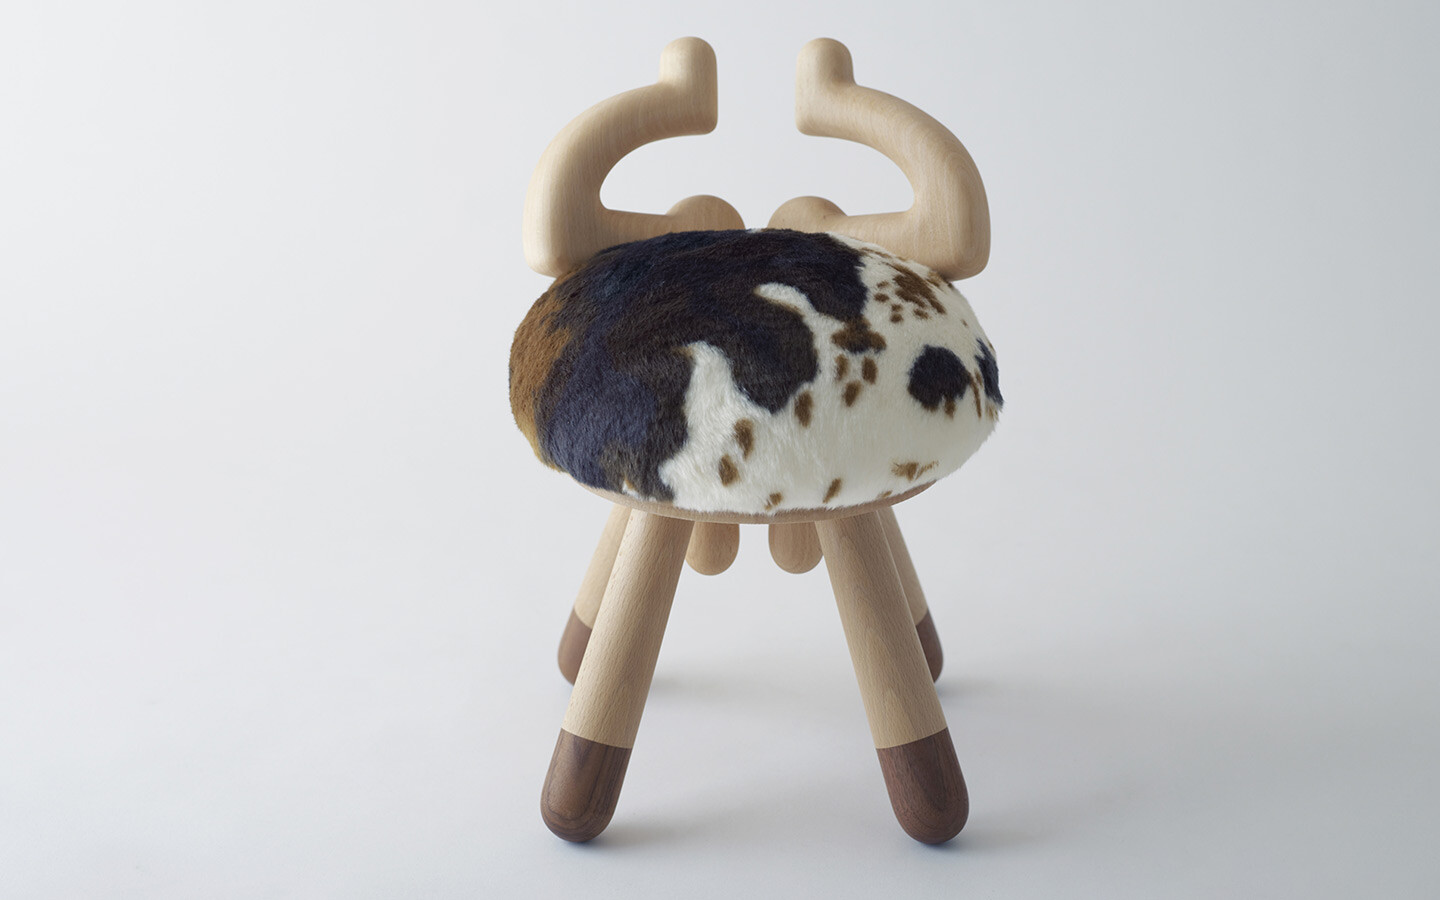 Collection of chairs Takeshi Sawada bring joy to children - HomeWorldDesign (8)